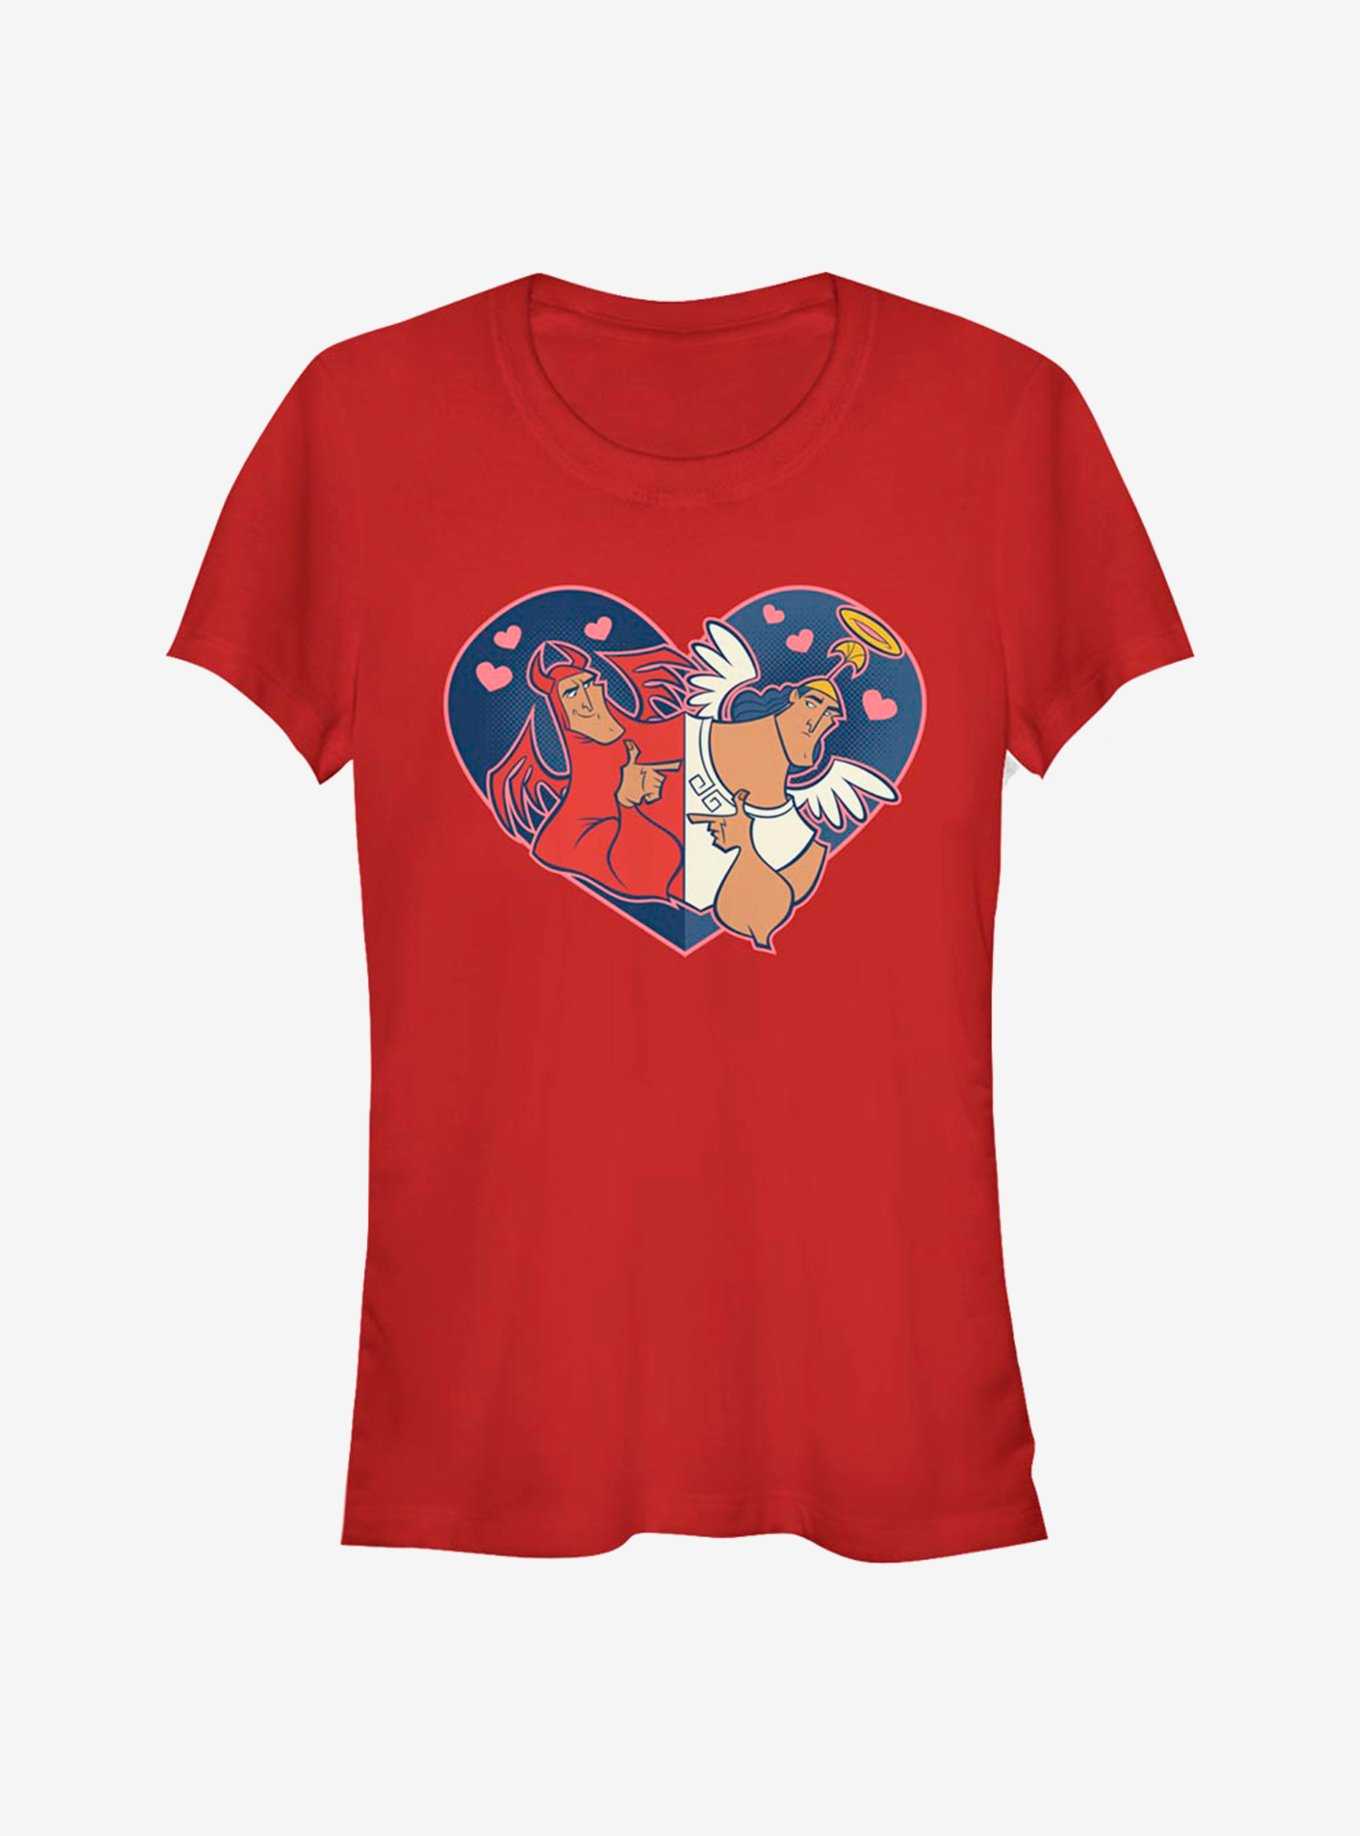 Disney The Emperor's New Groove Kronk Angel & Devil Heart Girls T-Shirt, , hi-res